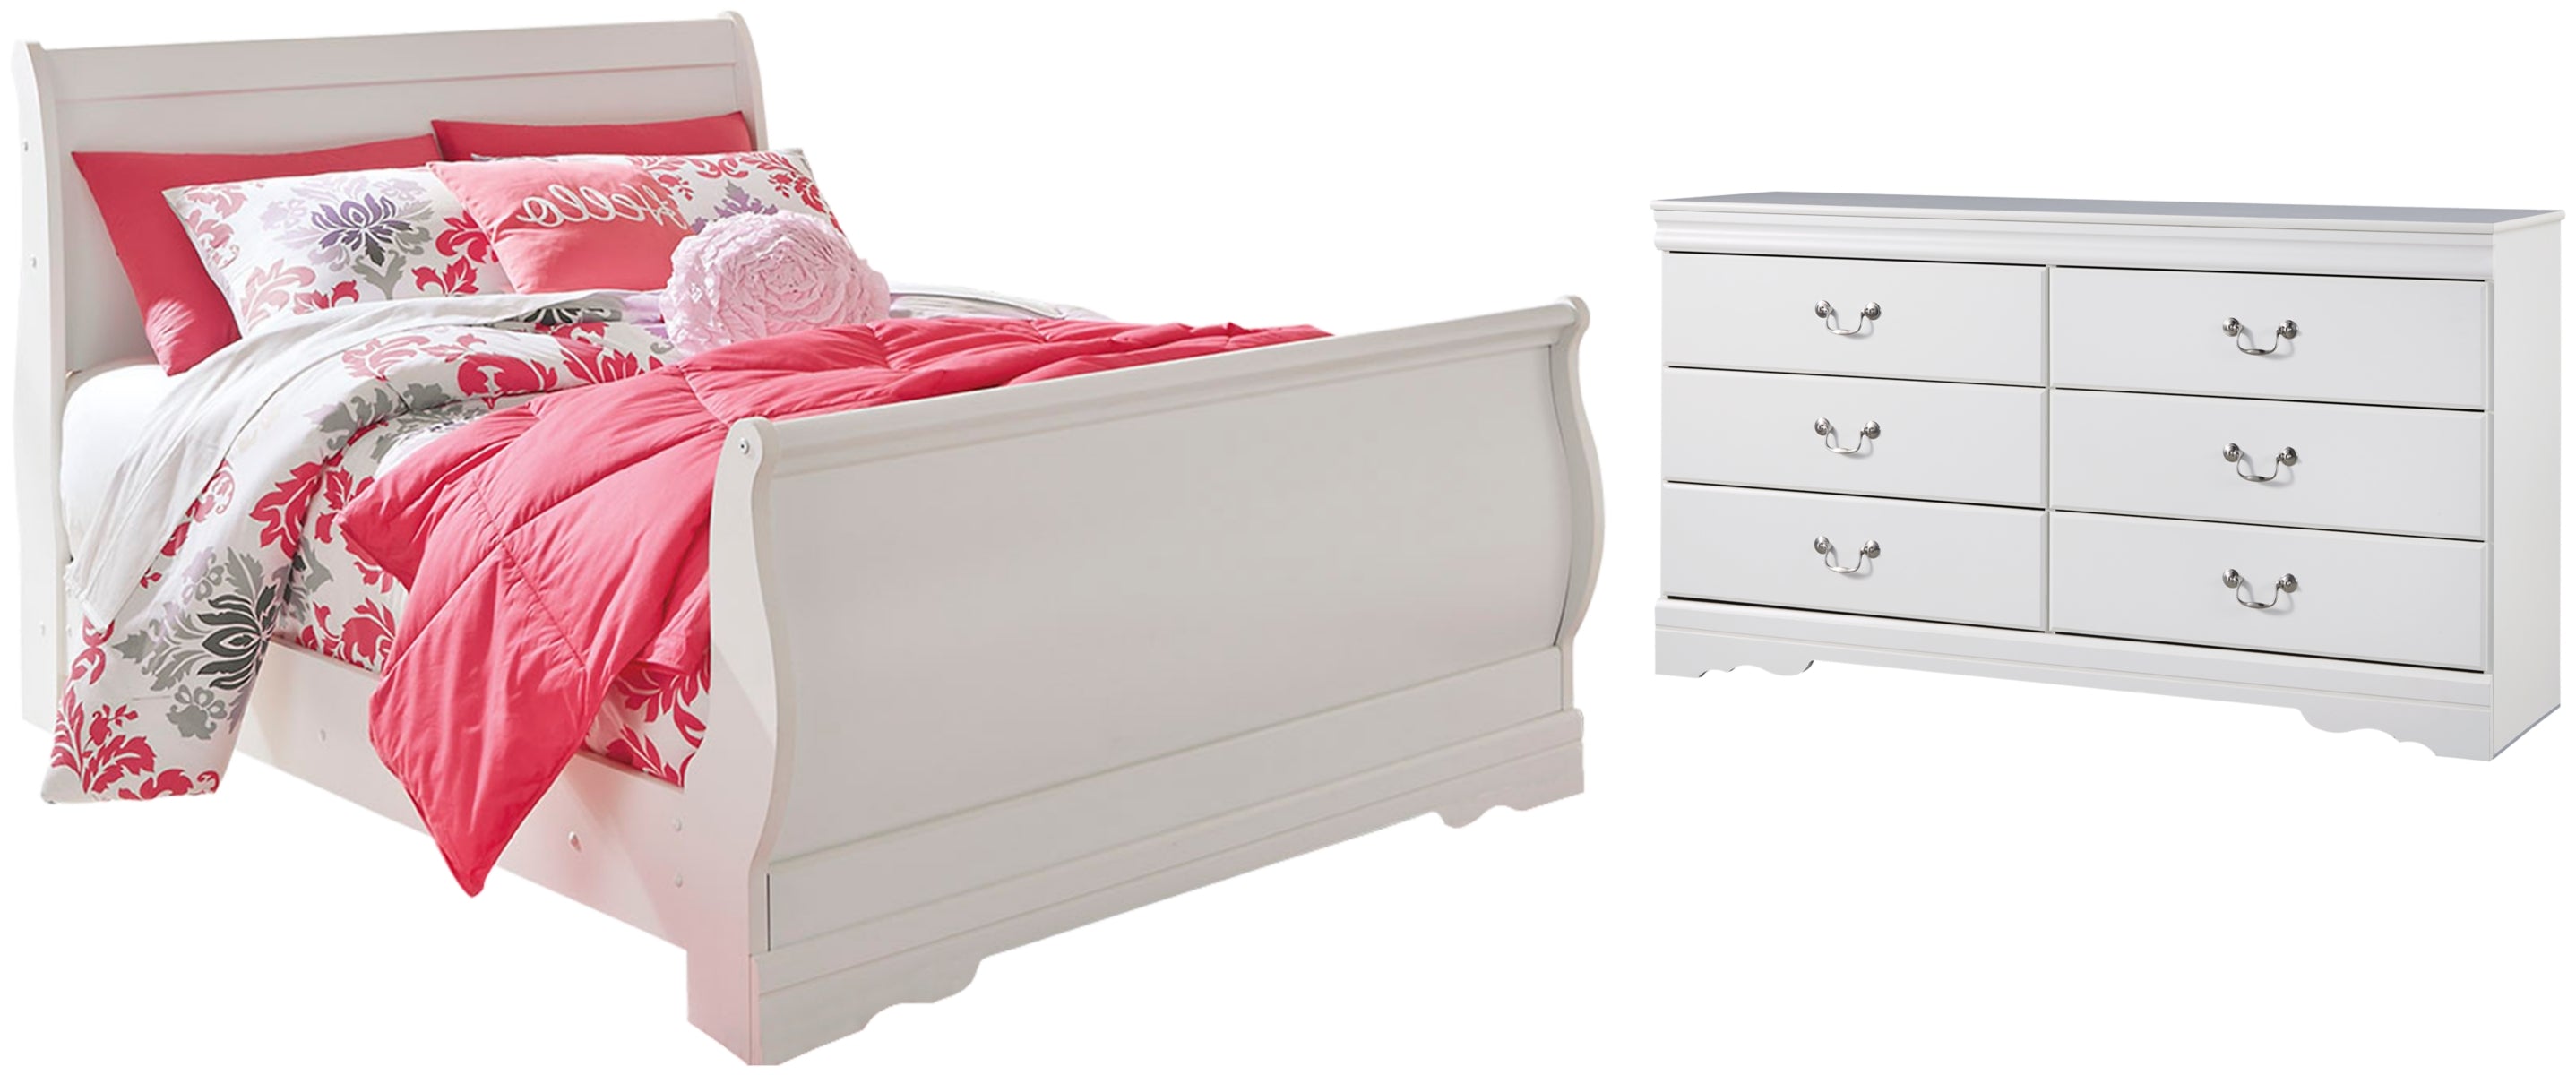 Anarasia Full Sleigh Bed with Dresser